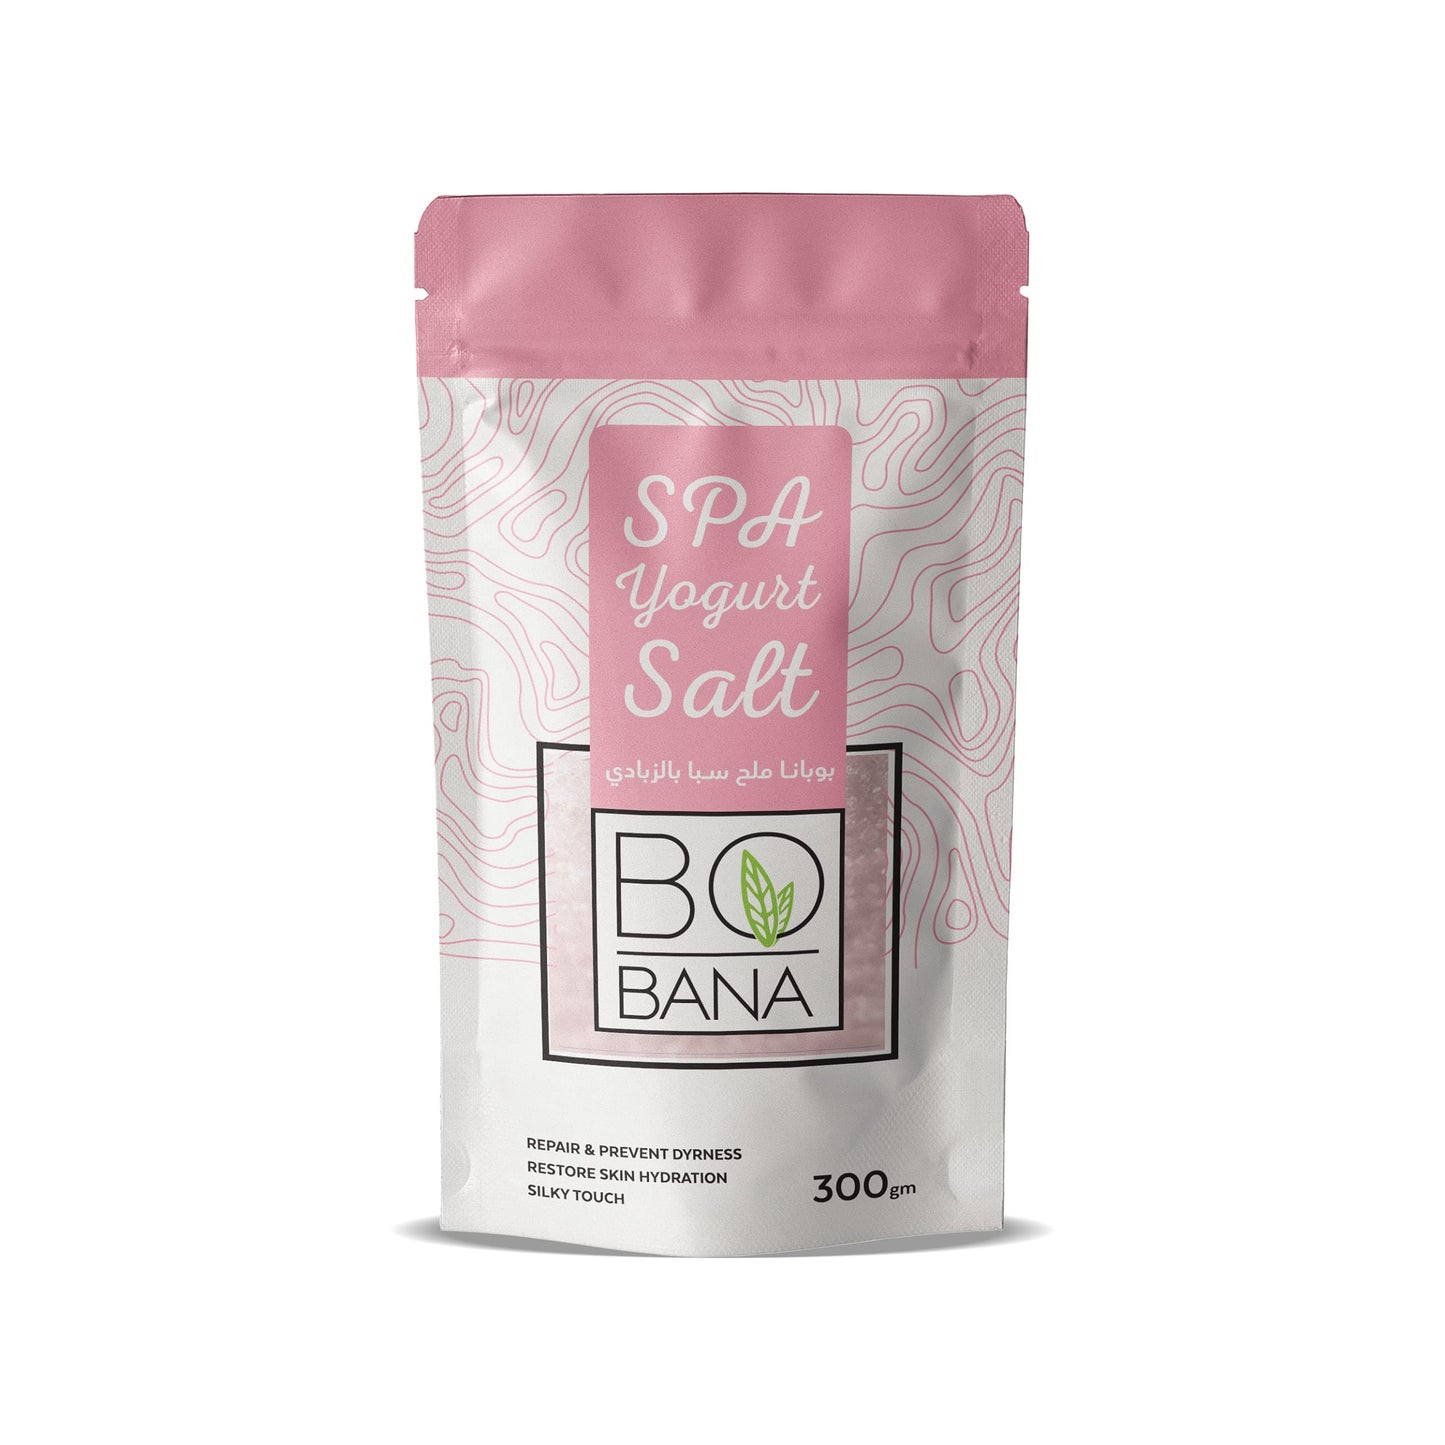 BoBana Spa Yogurt Salt 300gm